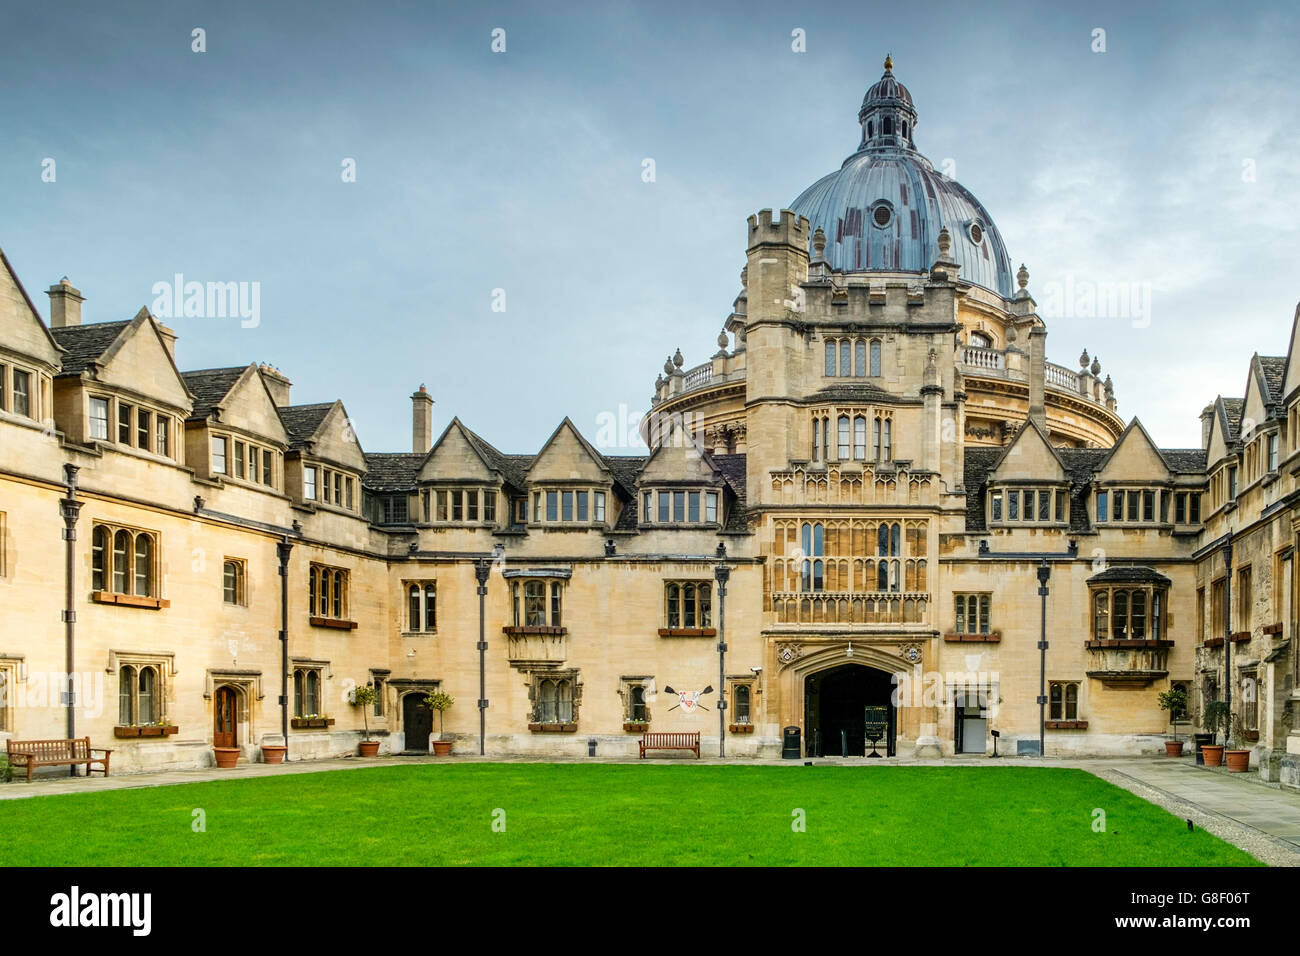 Frente Quad de la universidad de Brasenose Oxford con la cúpula de la cámara de Radcliffe detrás, Universidad de Oxford, Oxfordshire, Reino Unido Foto de stock